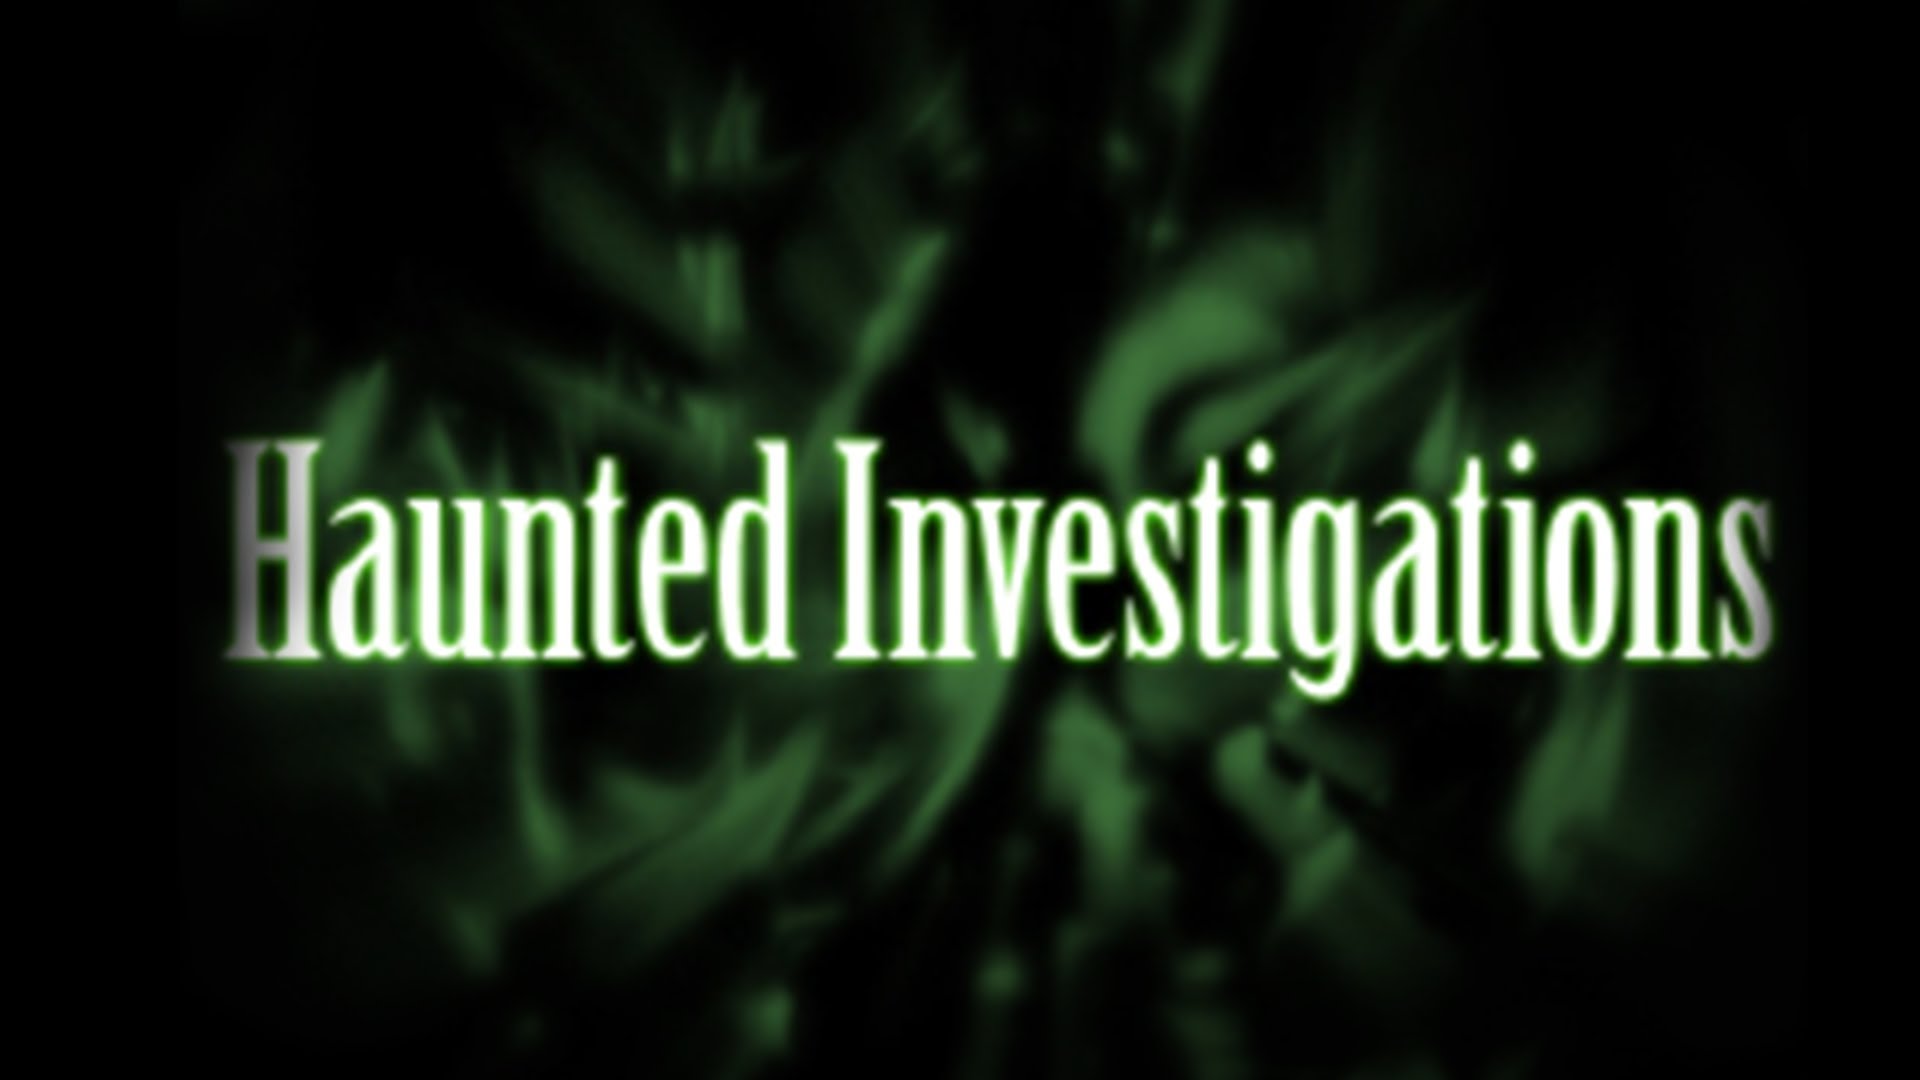 Haunted investigations. Тема конкурса Haunted. Haunted Preview. Слова на тему Haunted.